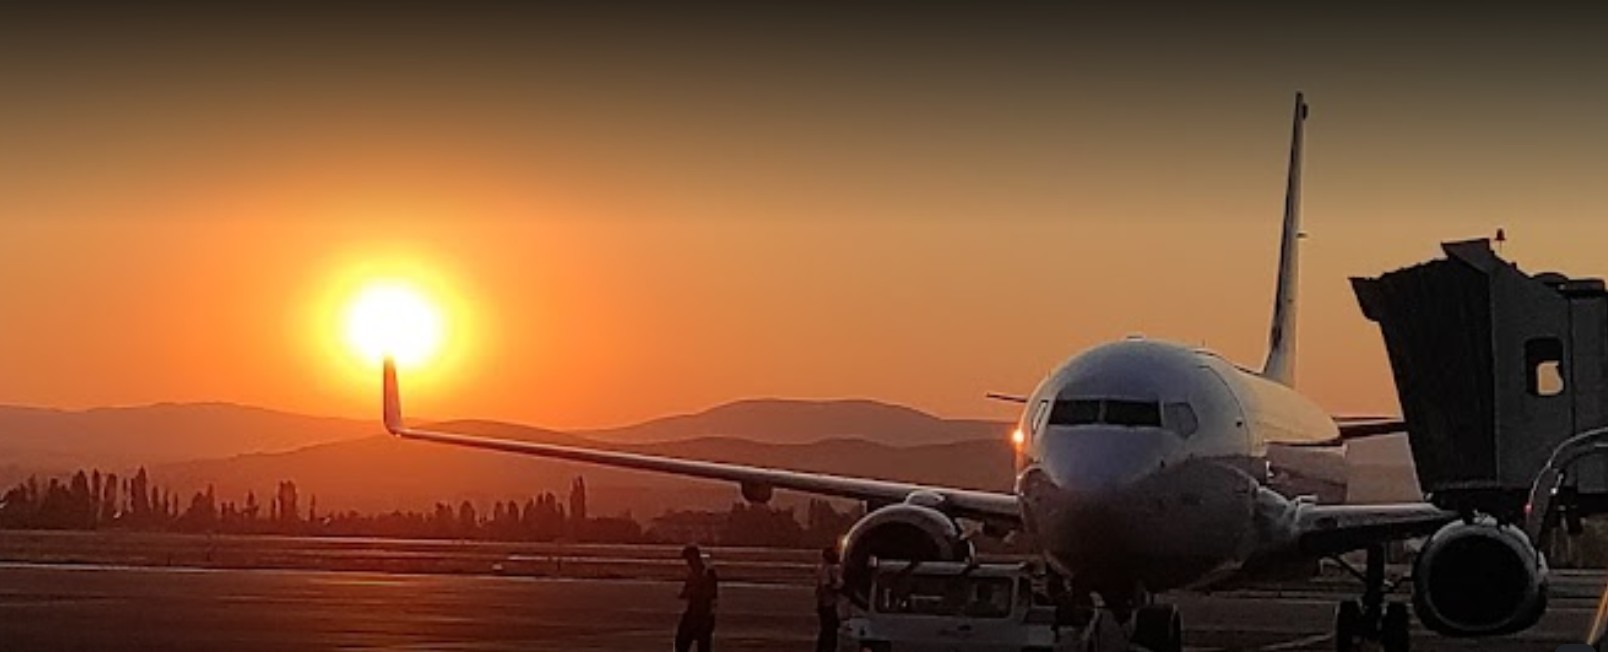 Авиабилеты в Анкару